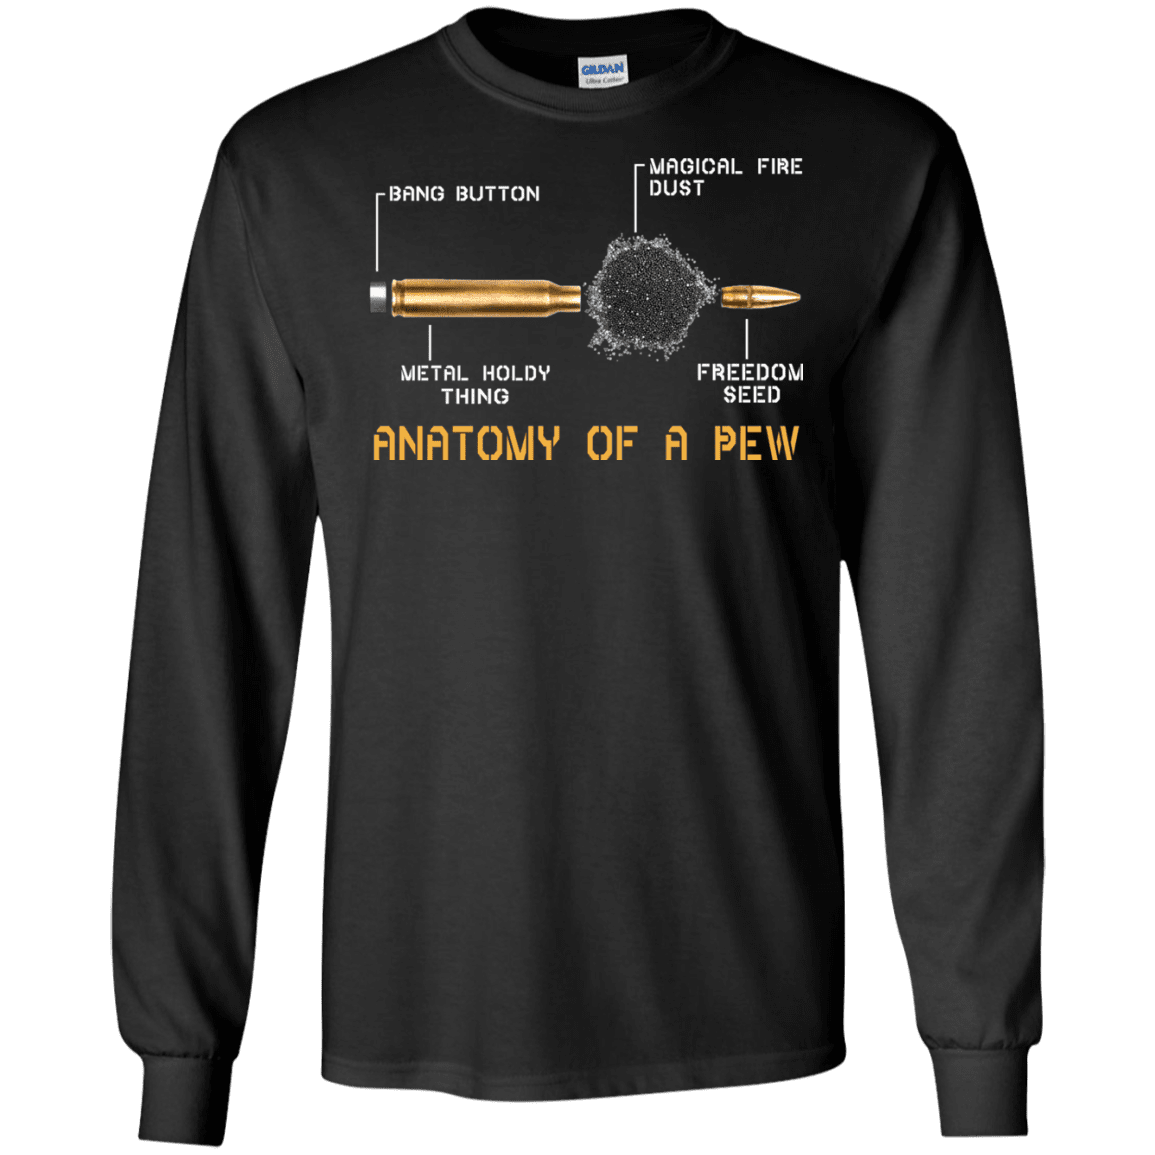 Military T-Shirt "ANATOMY OF A PEW"-TShirt-General-Veterans Nation